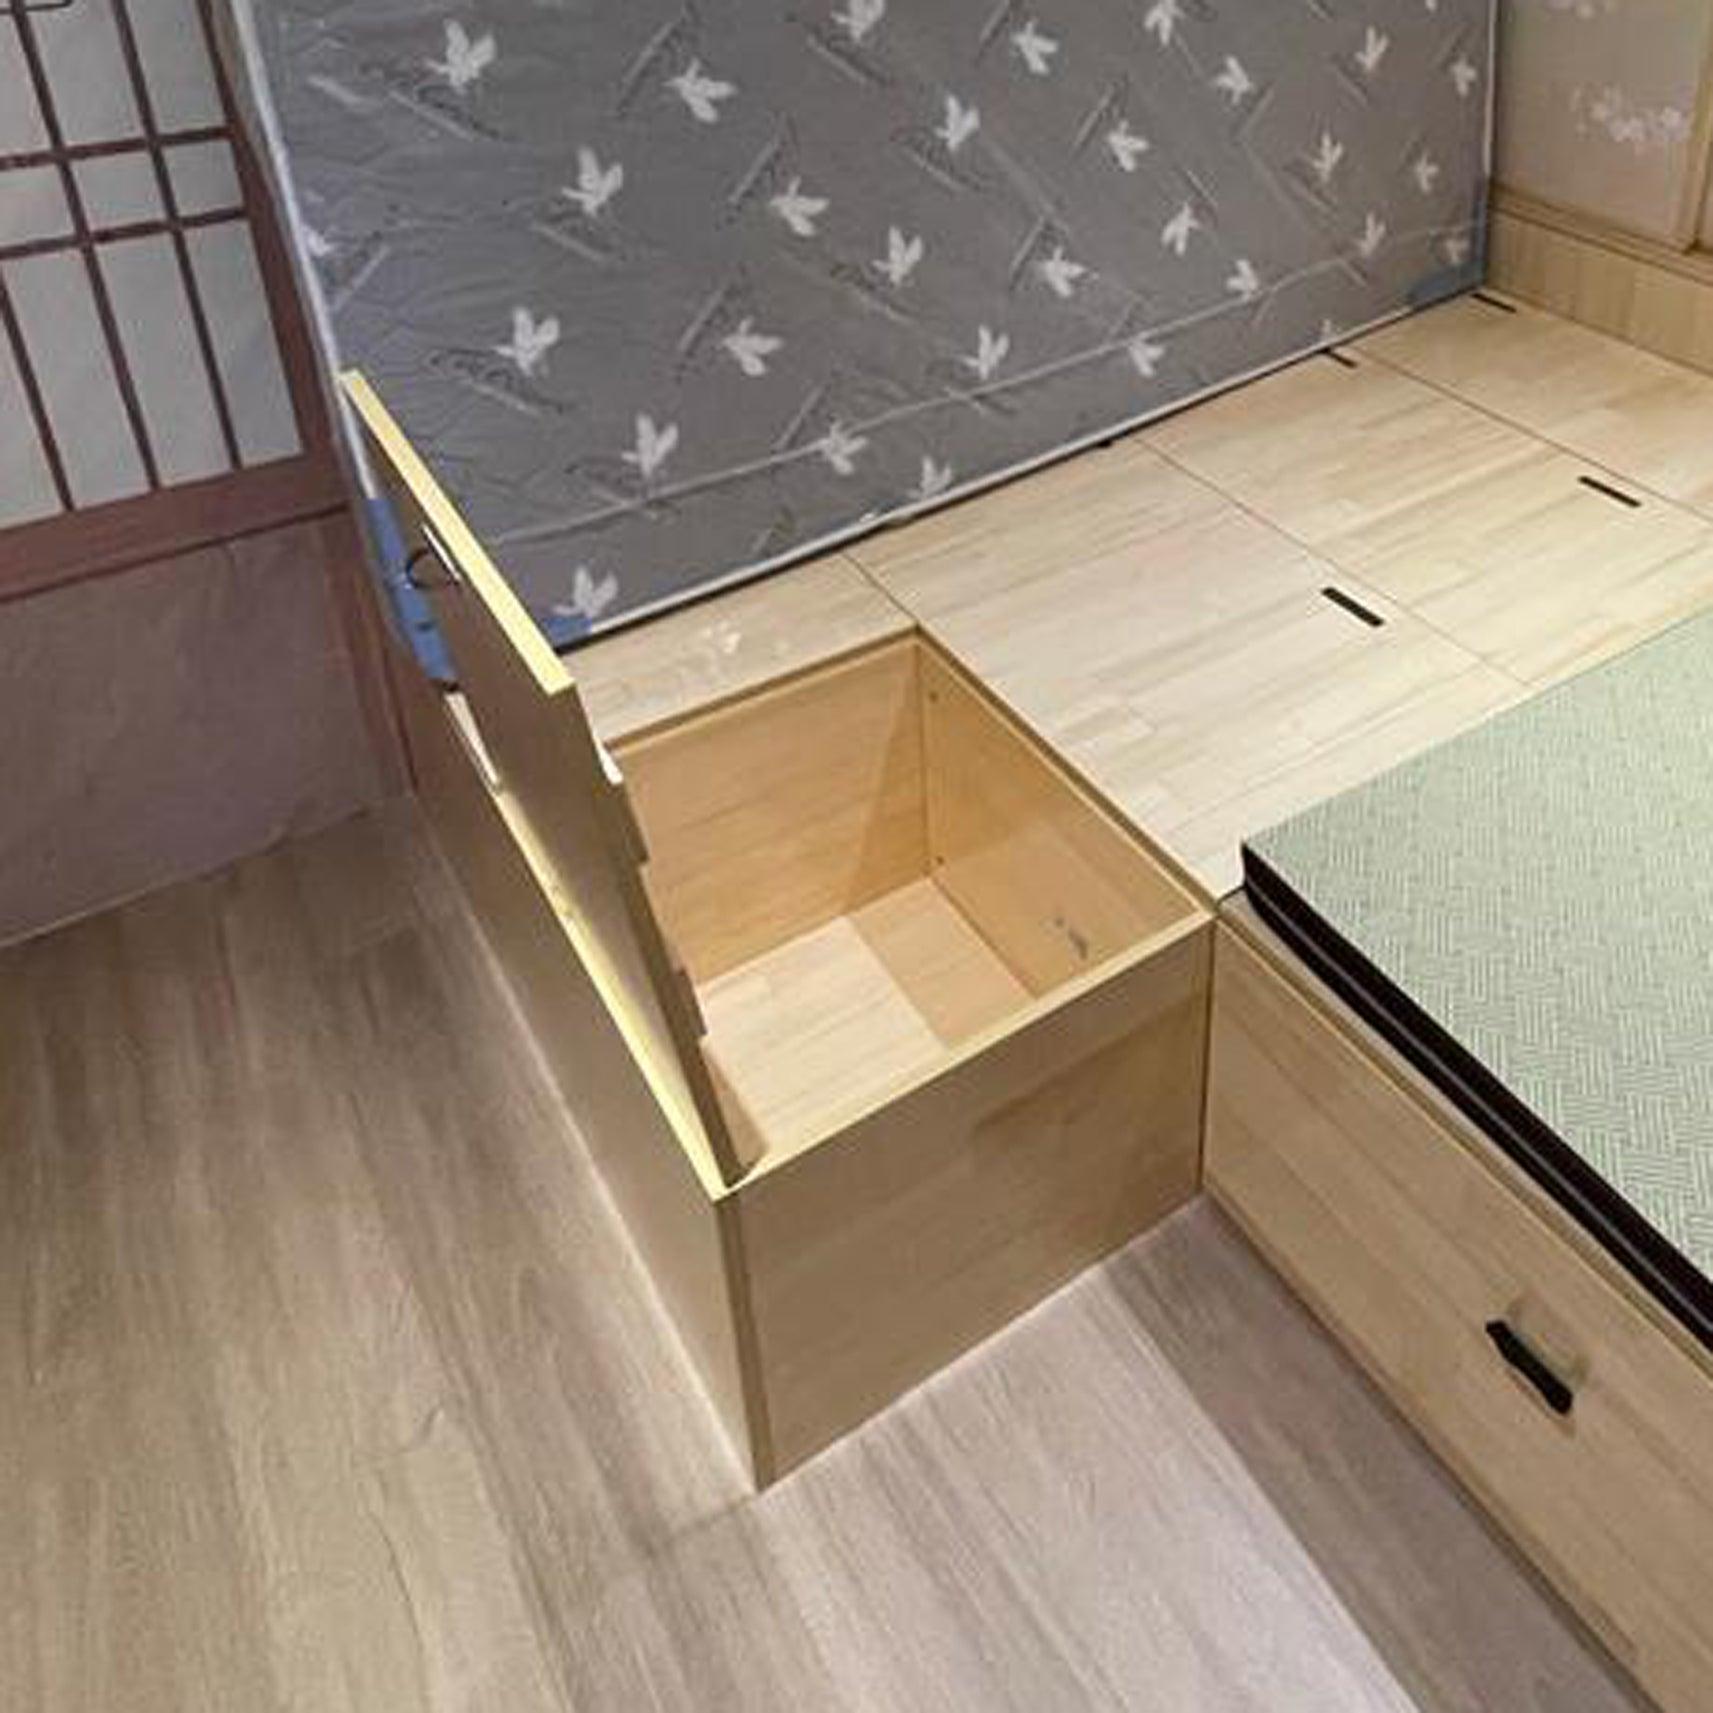 Oslo Designs Japanese Tatami Storage Bed - Kids Haven